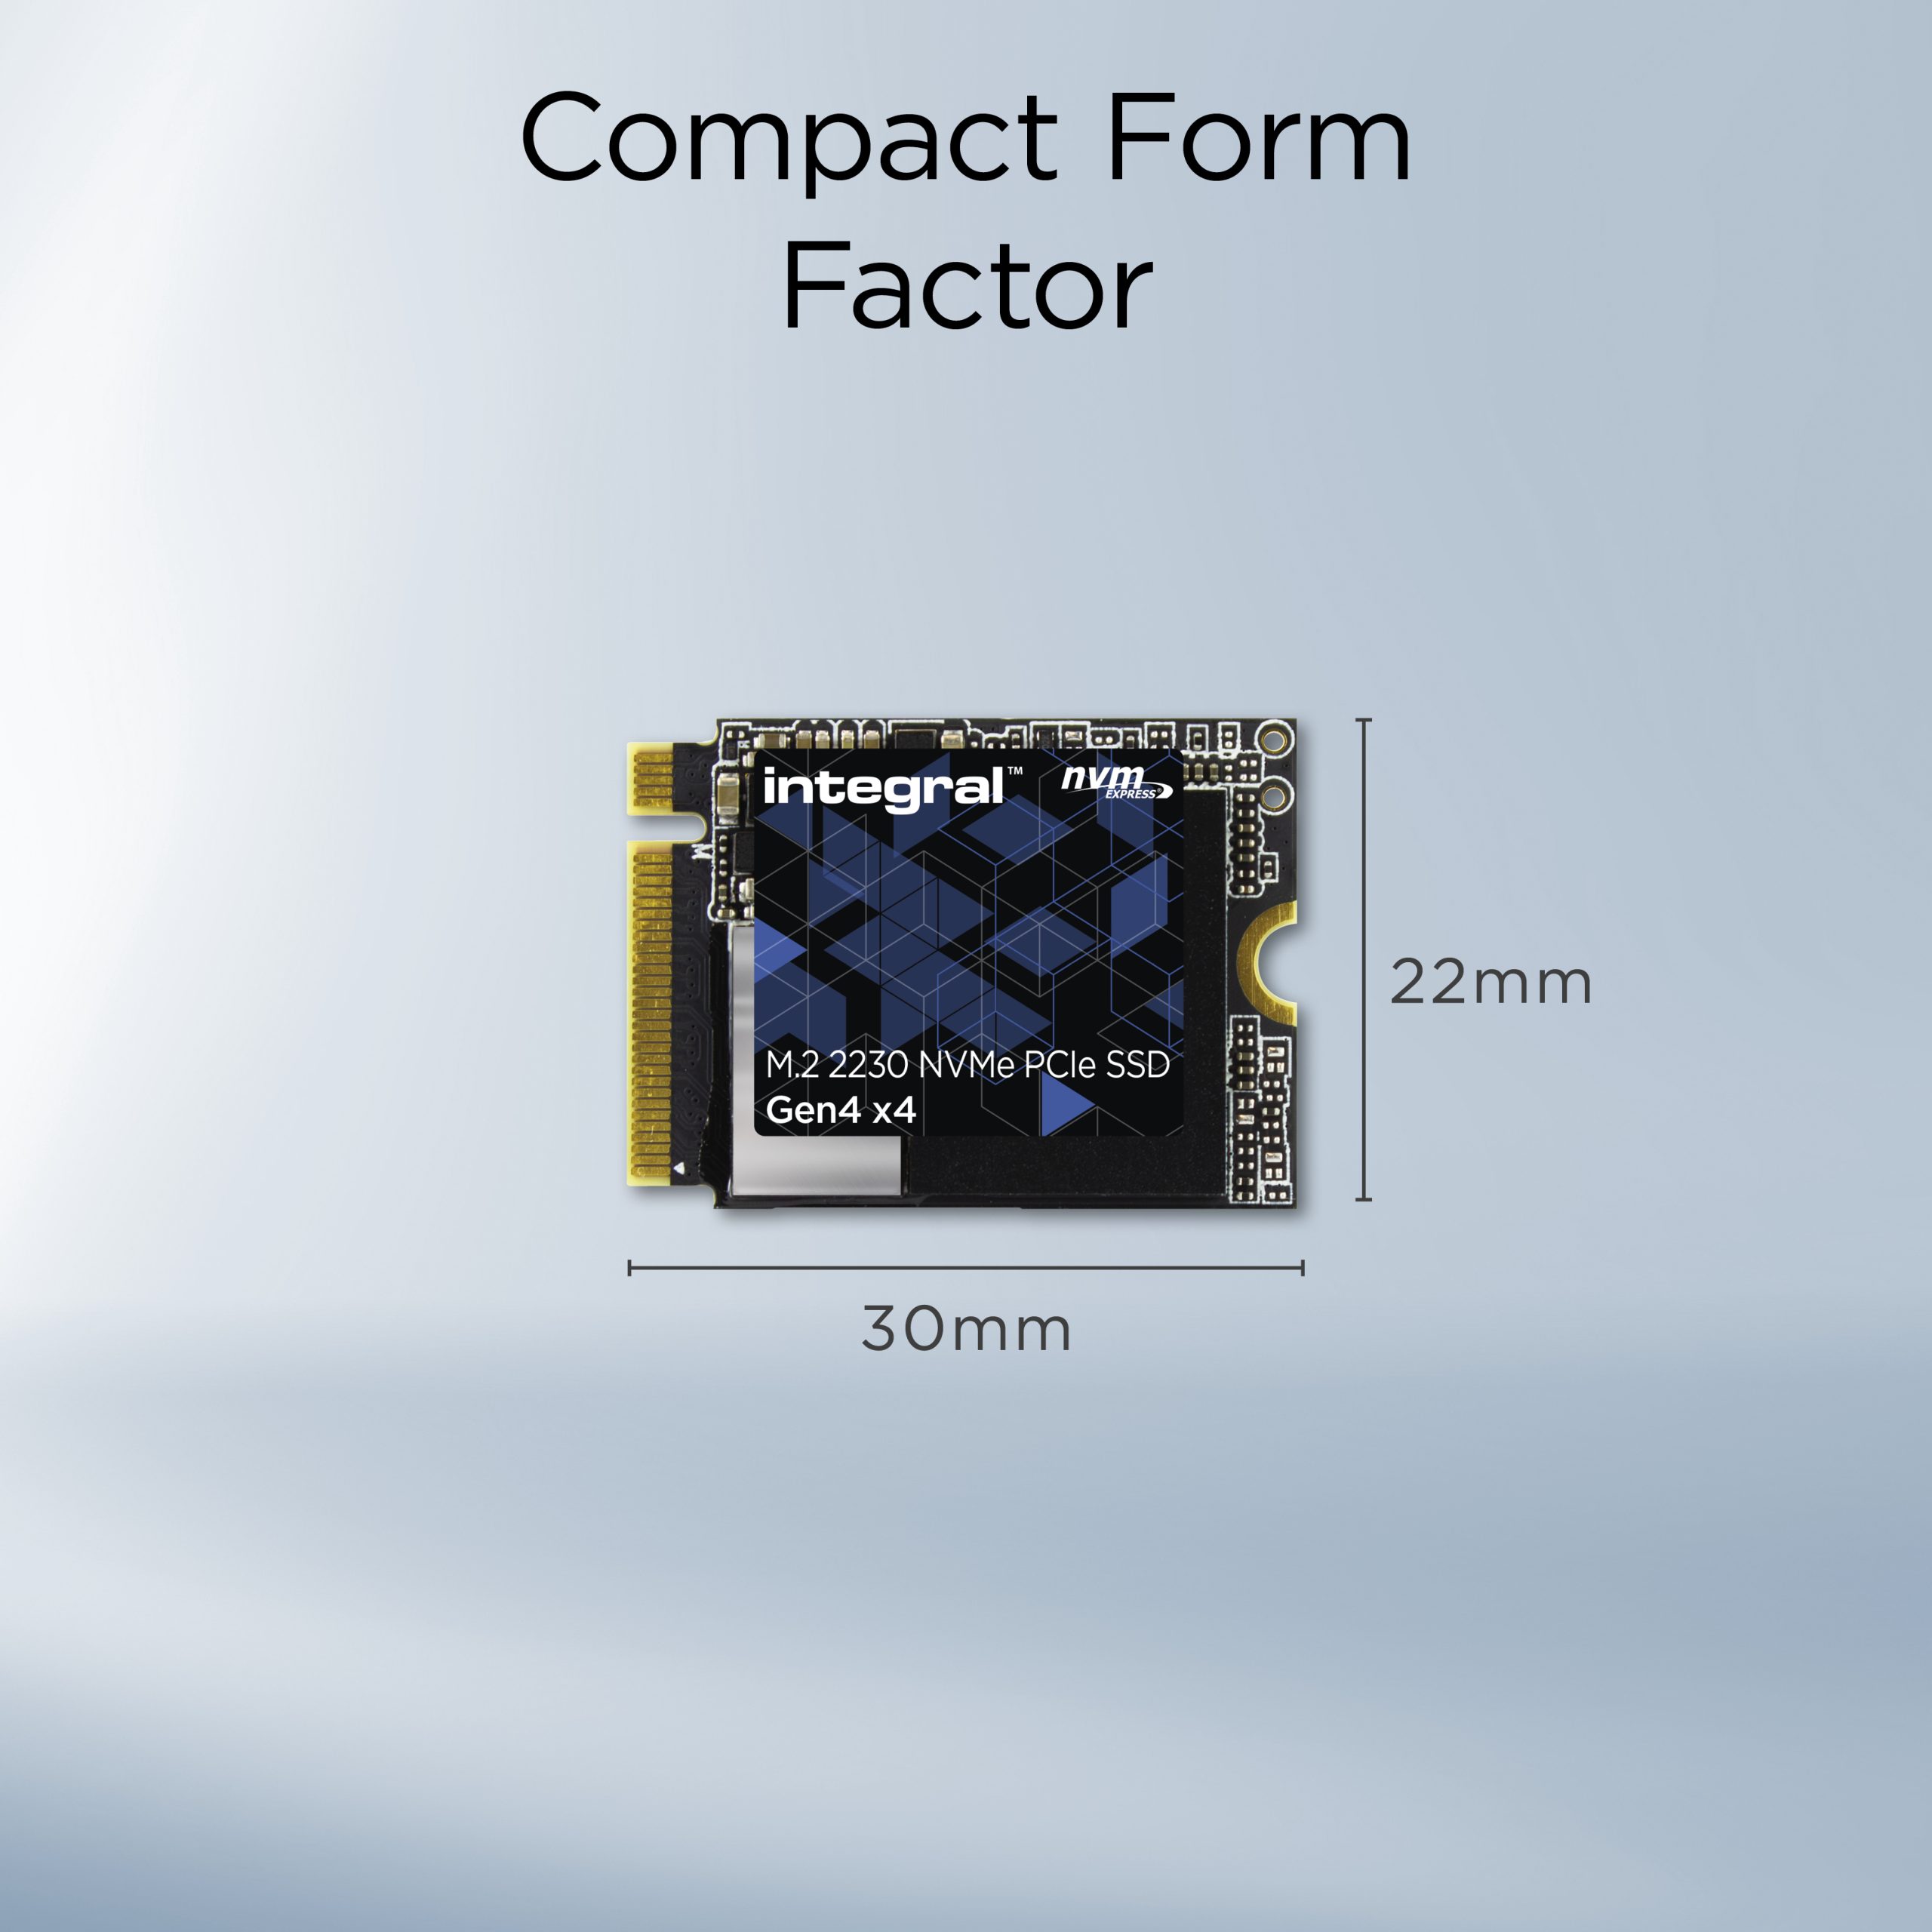 Compact M.2 2230 NVMe SSD Gen4 Dimensions